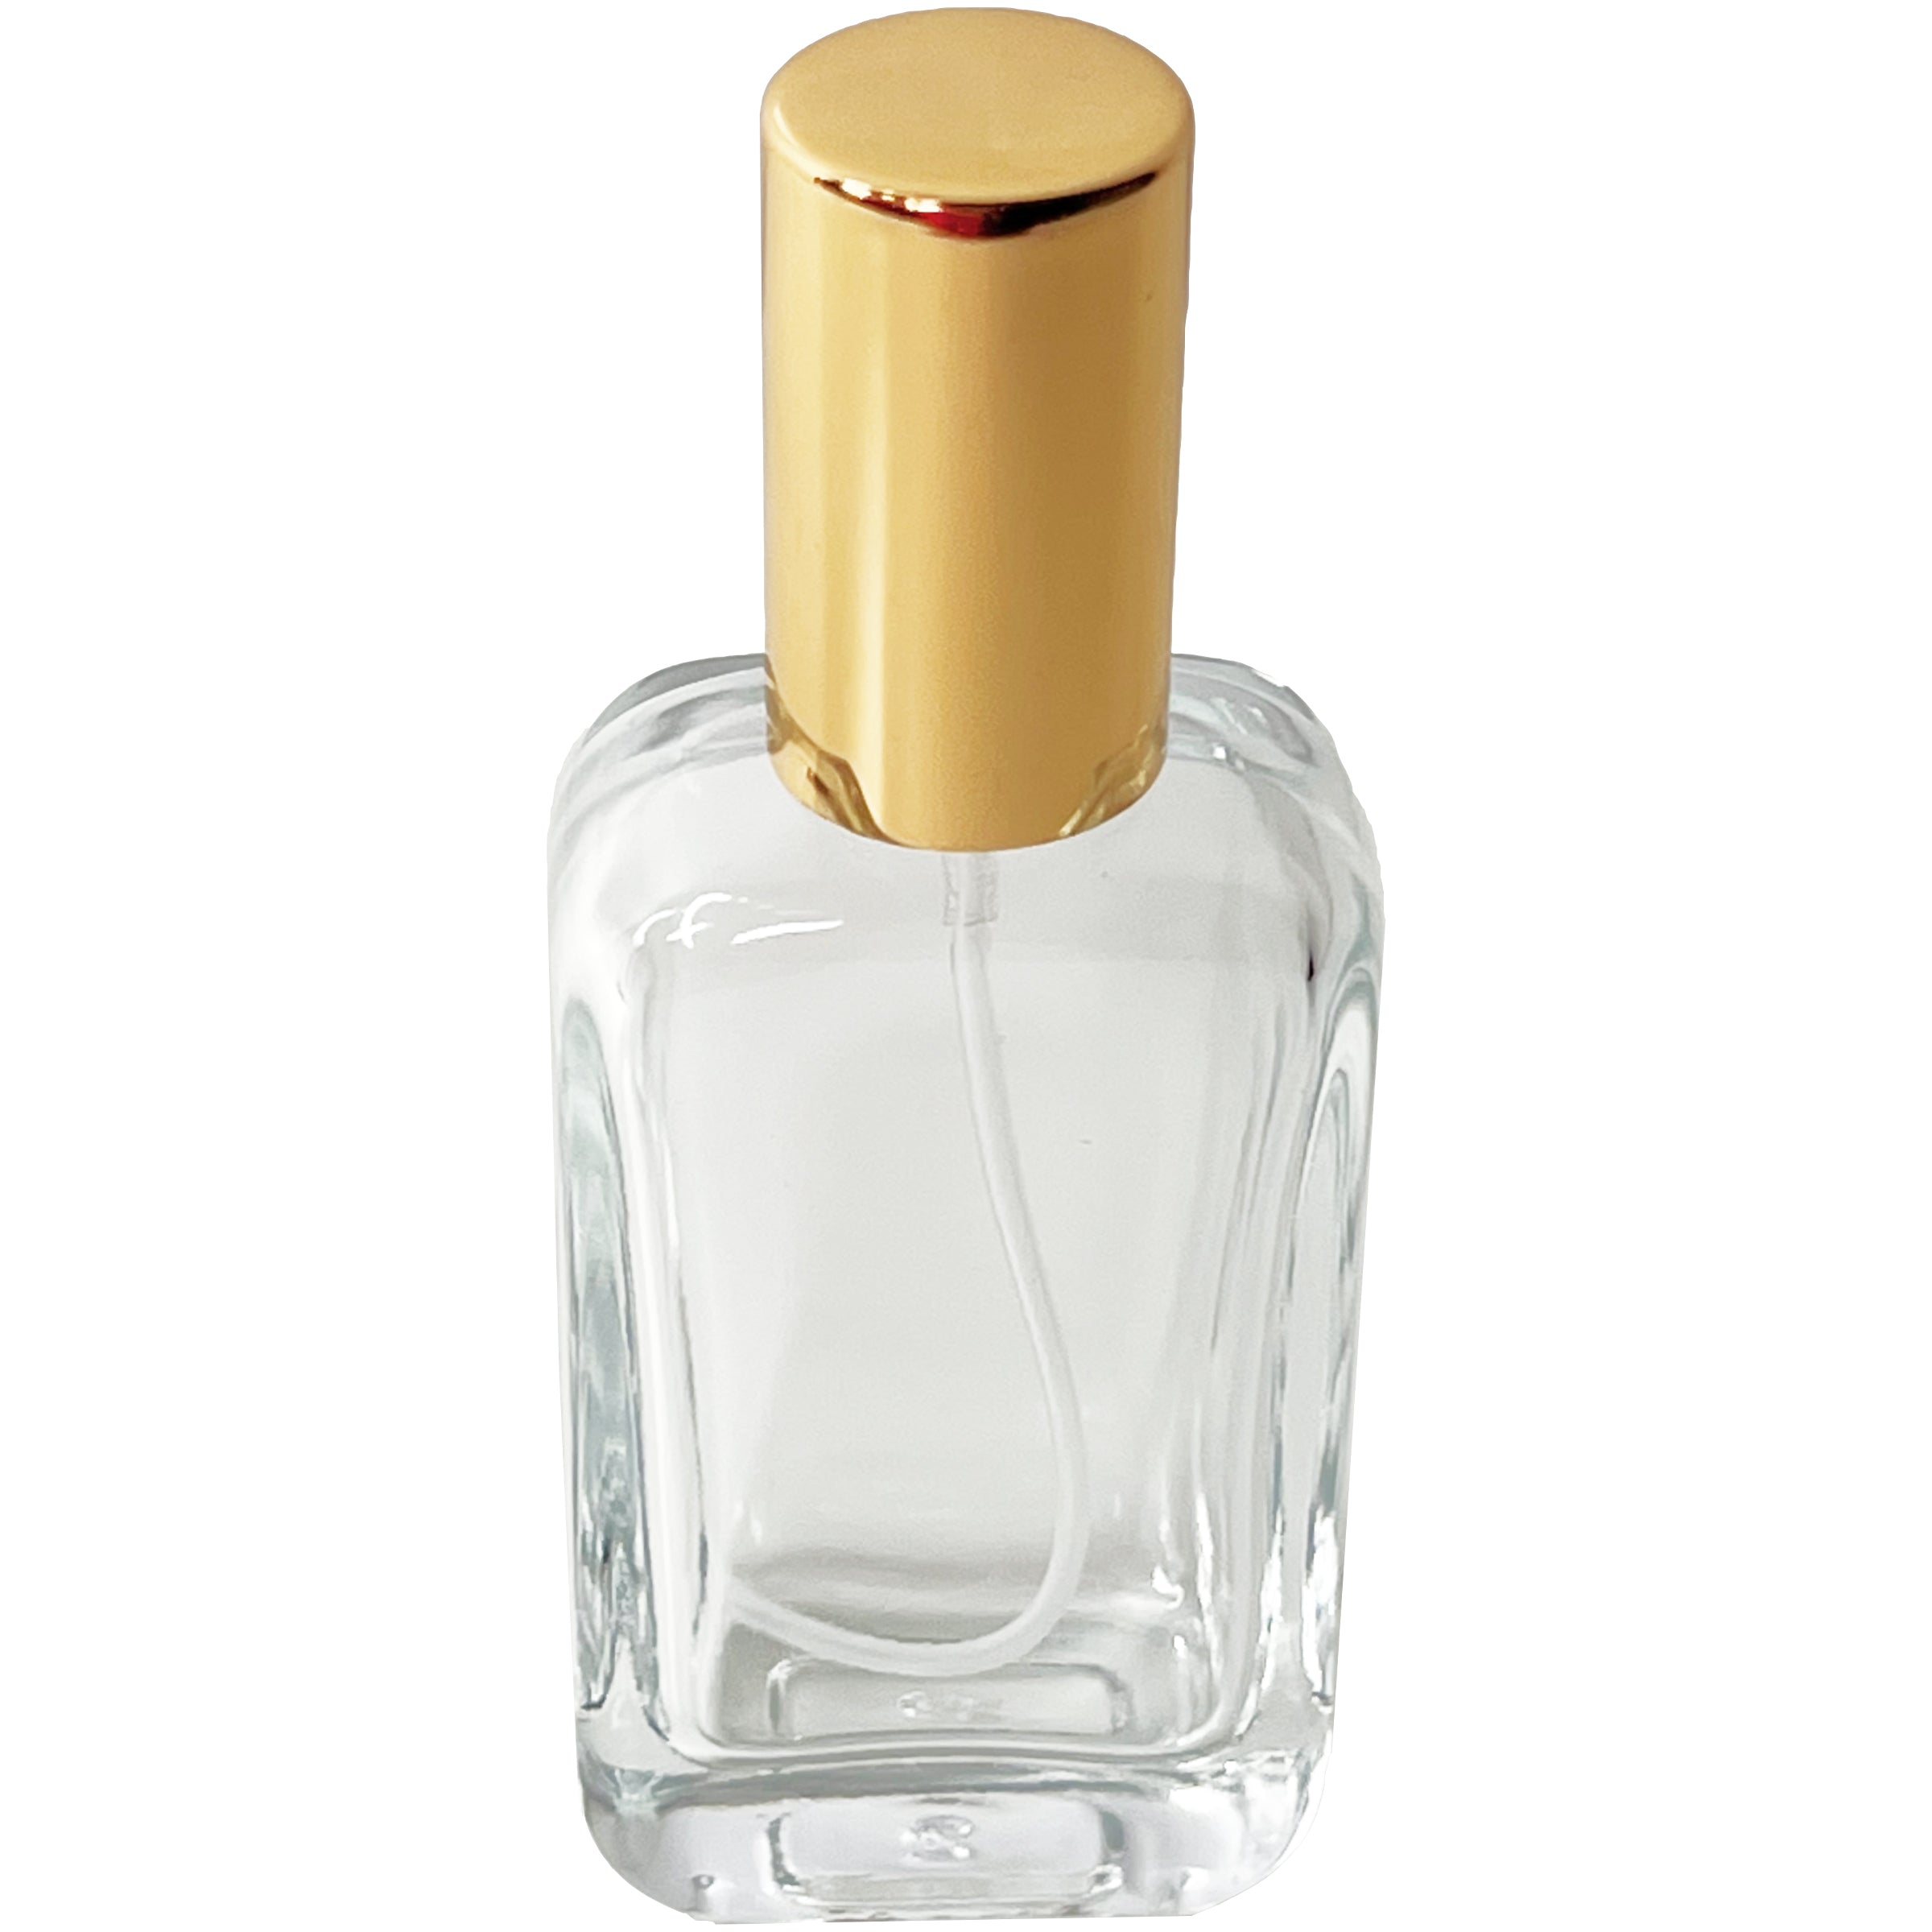 30ml 1oz Perfume Rounded Glass Spray Bottles Gold cap